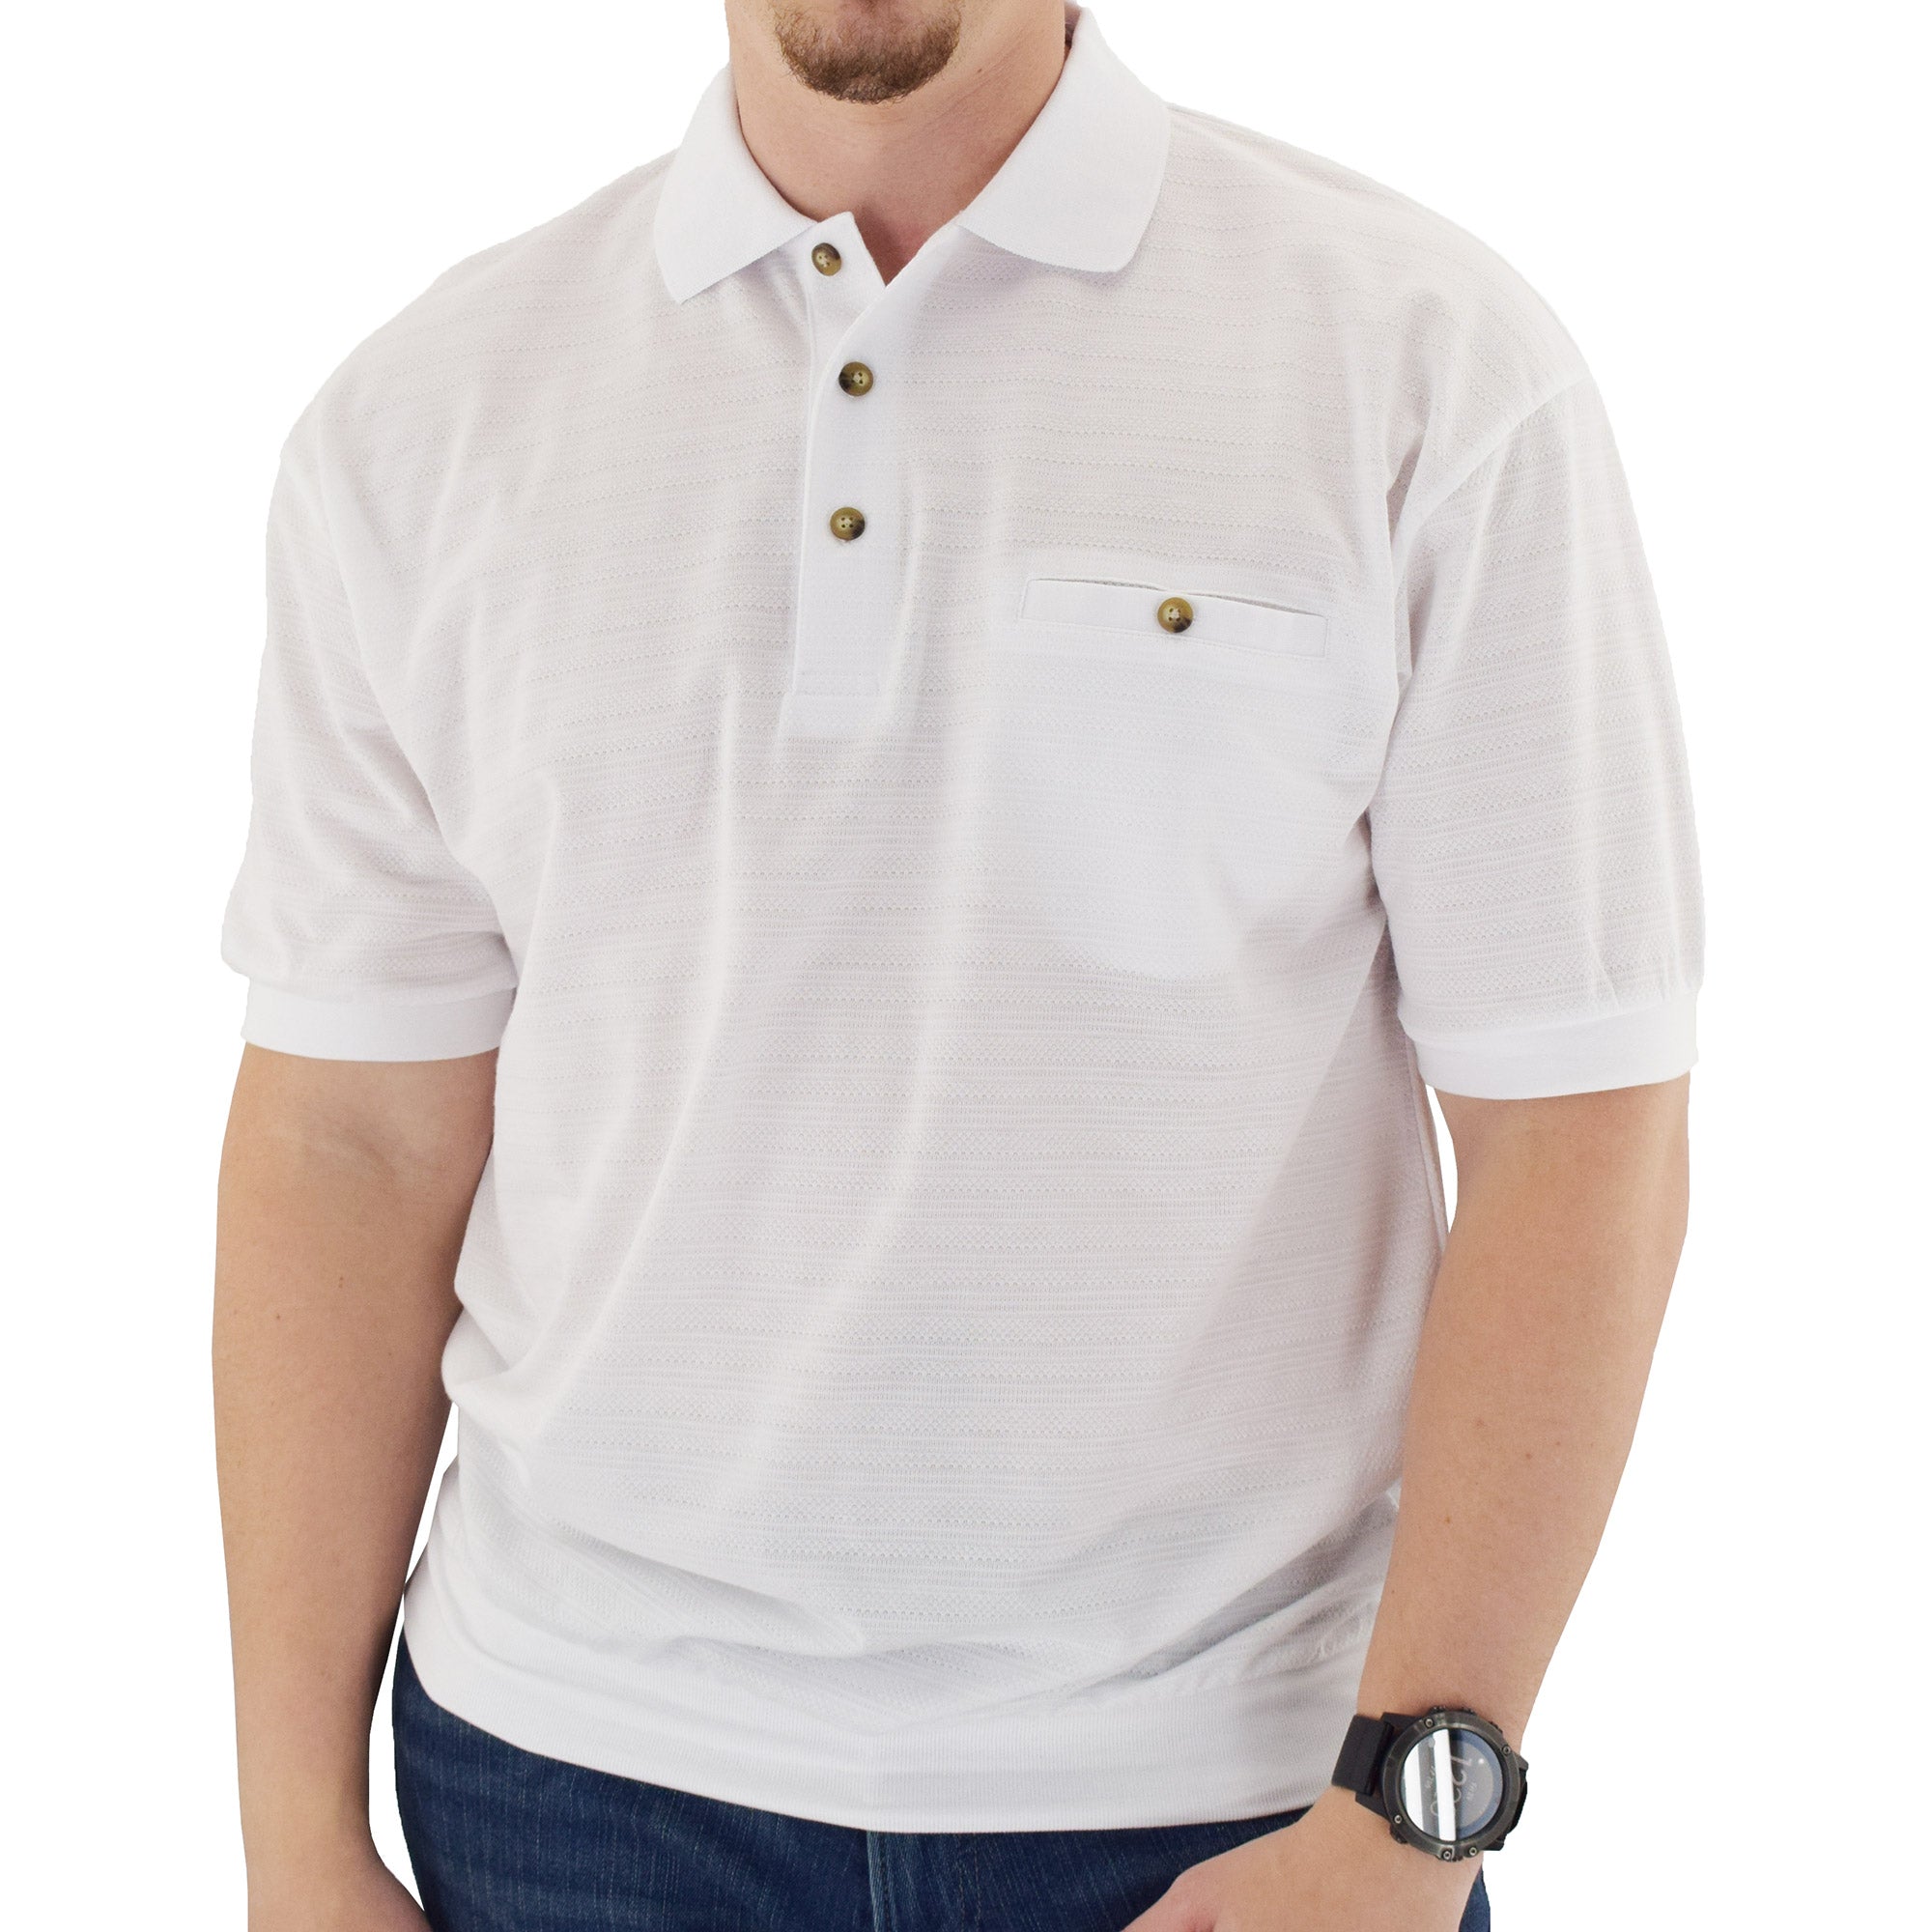 Classics by Palmland Short Sleeve Banded Bottom Shirt 6070-208BT White - theflagshirt